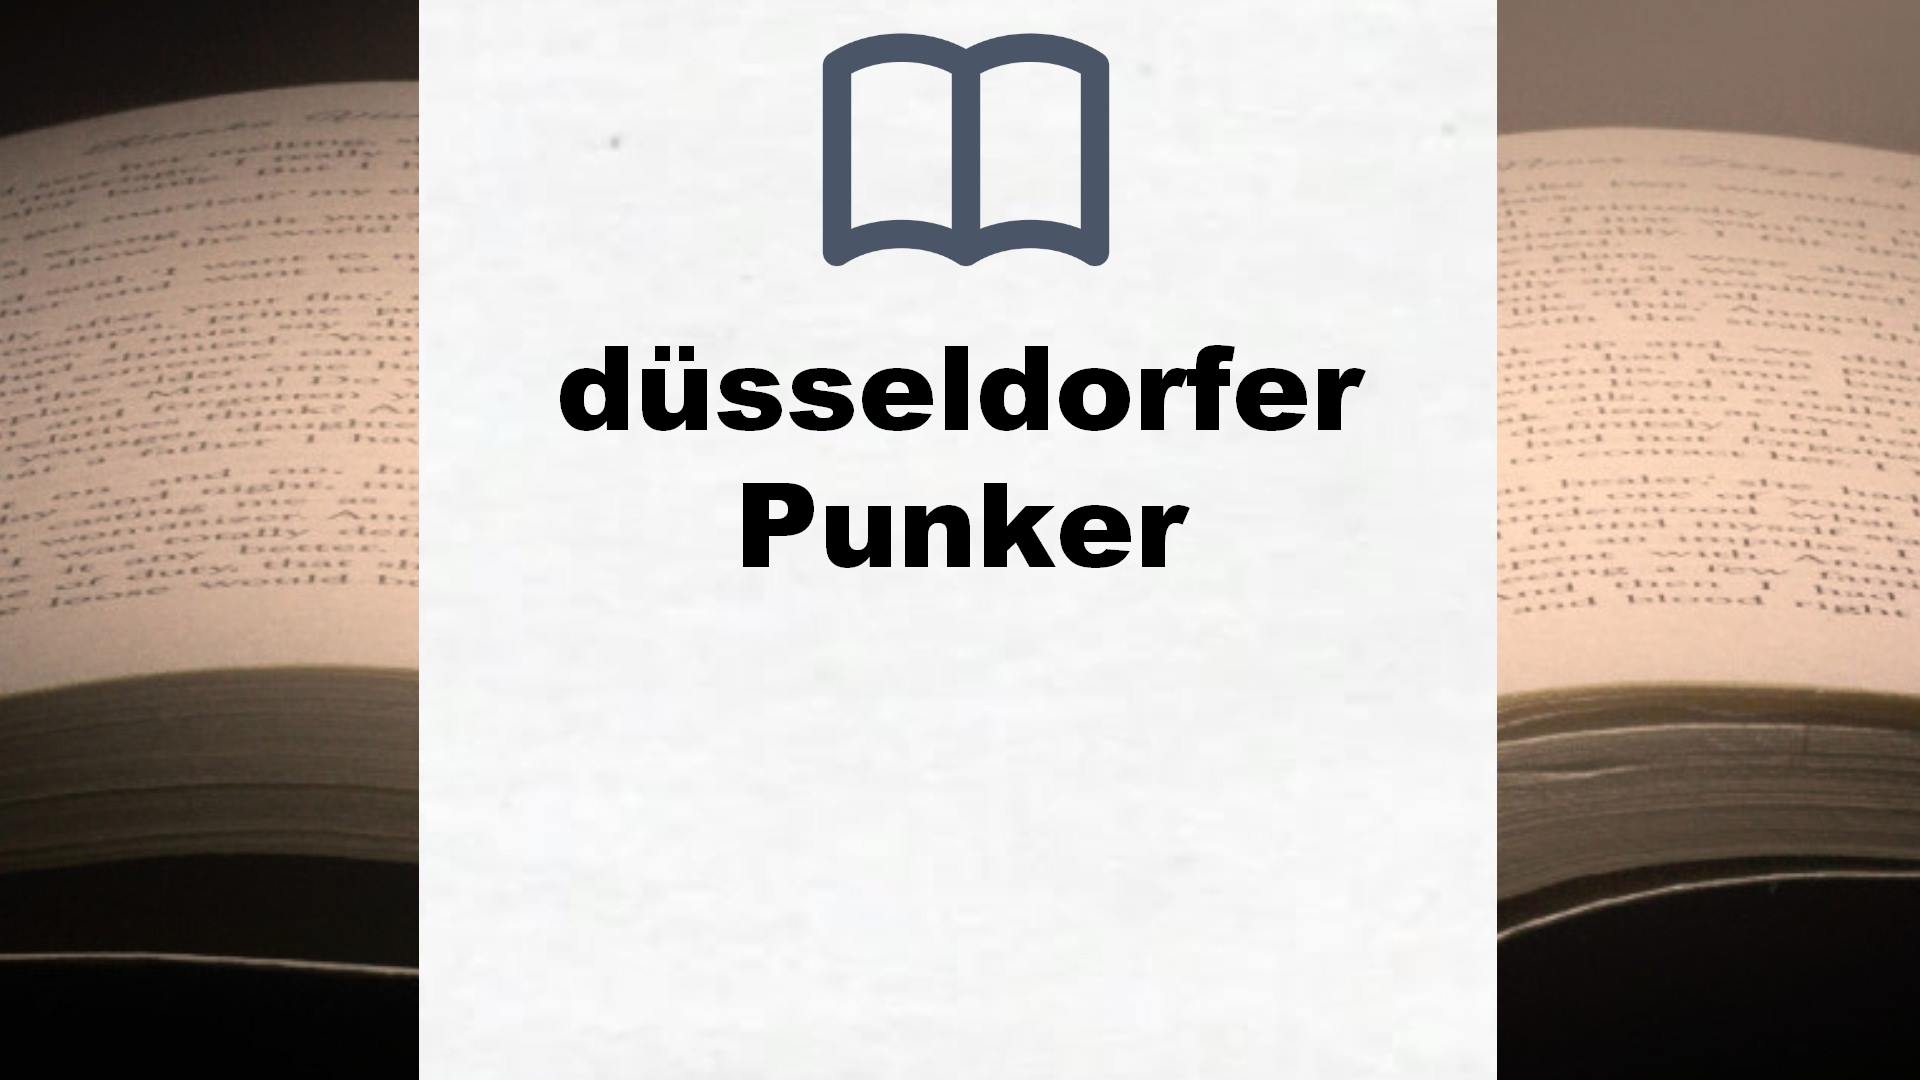 Bücher über düsseldorfer Punker